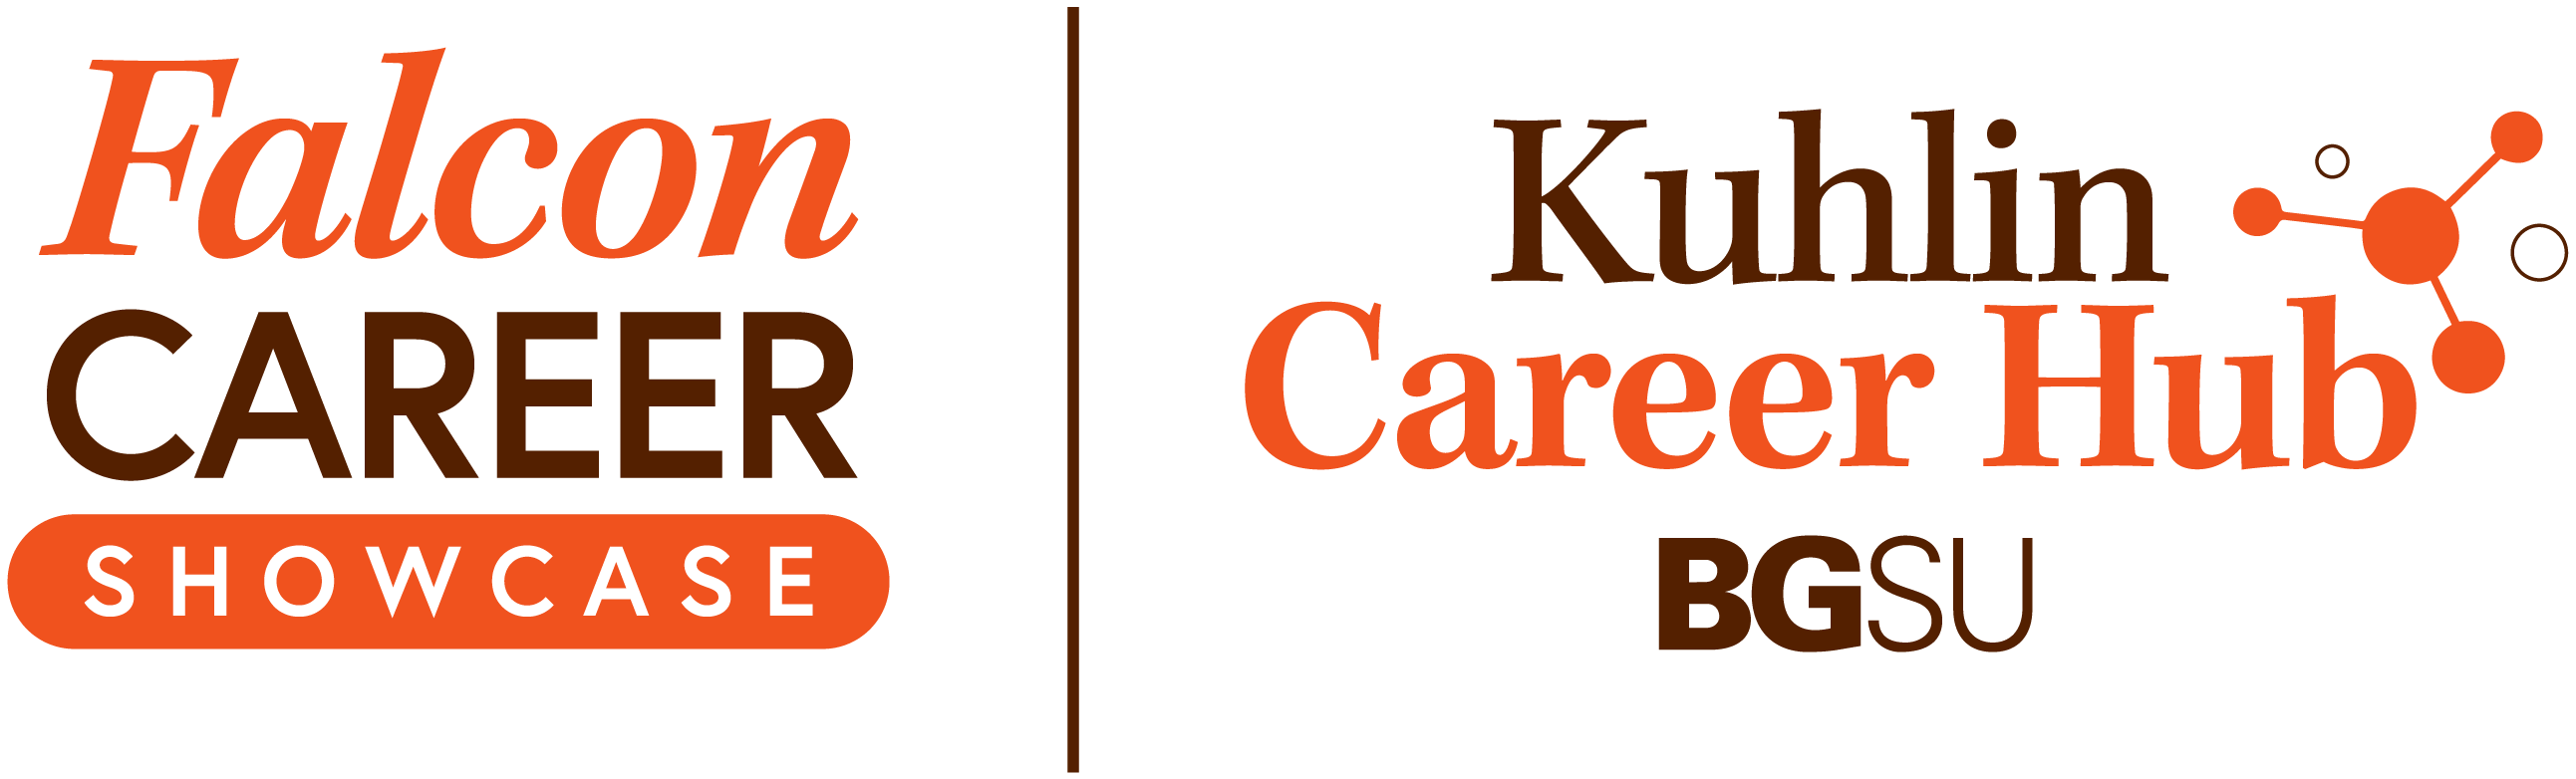 Falcon Career Week | Kuhlin Career Hub BGSU Logo